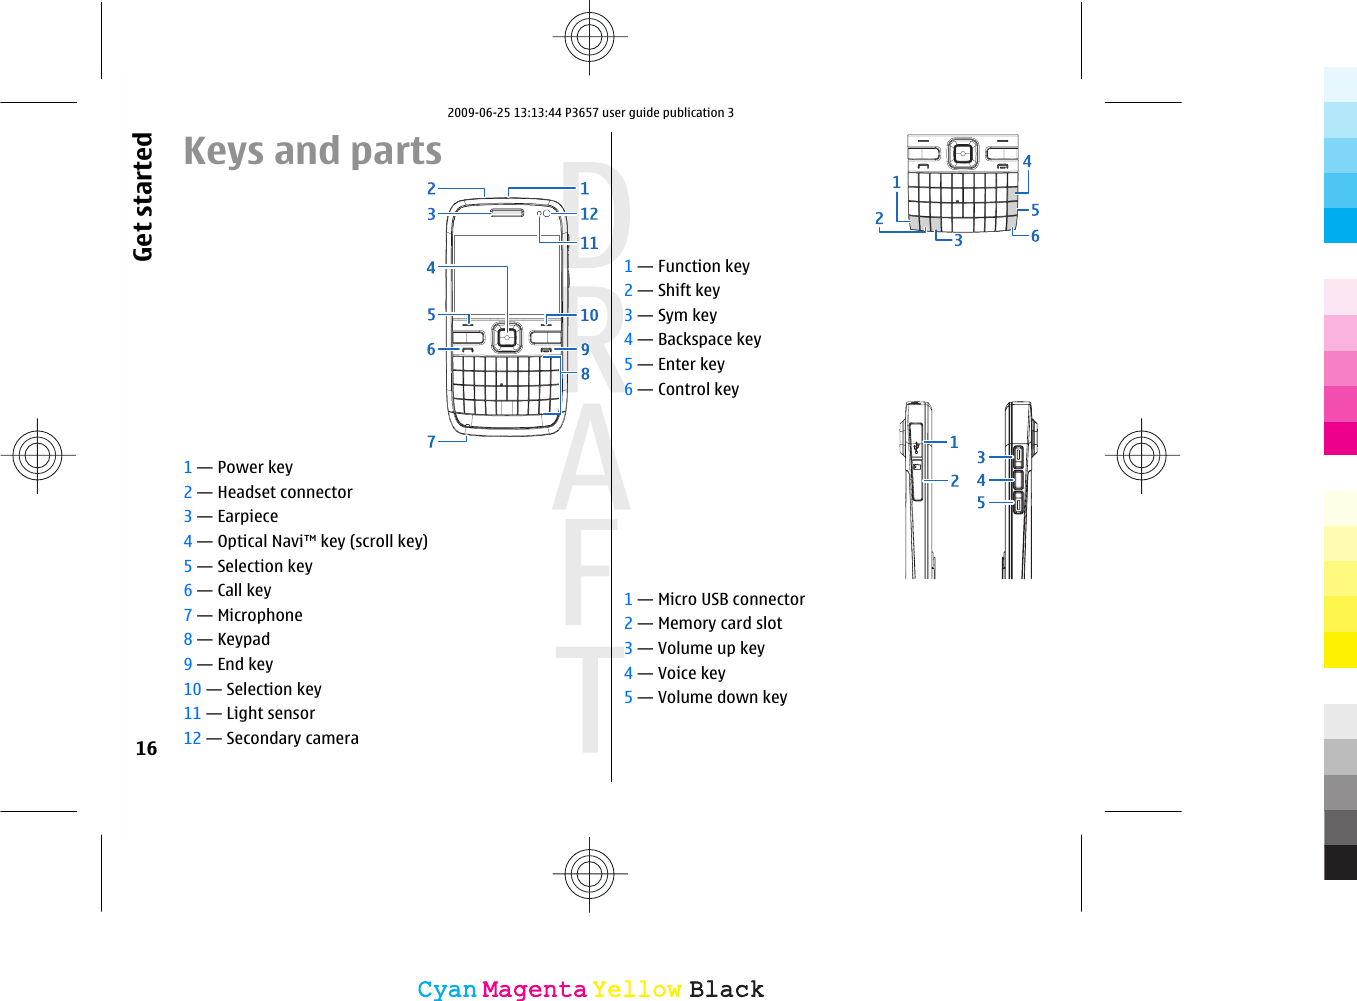 Keys and parts1 — Power key2 — Headset connector3 — Earpiece4 — Optical Navi™ key (scroll key)5 — Selection key6 — Call key7 — Microphone8 — Keypad9 — End key10 — Selection key11 — Light sensor12 — Secondary camera1 — Function key2 — Shift key3 — Sym key4 — Backspace key5 — Enter key6 — Control key1 — Micro USB connector2 — Memory card slot3 — Volume up key4 — Voice key5 — Volume down key16Get startedCyanCyanMagentaMagentaYellowYellowBlackBlack2009-06-25 13:13:44 P3657 user guide publication 3